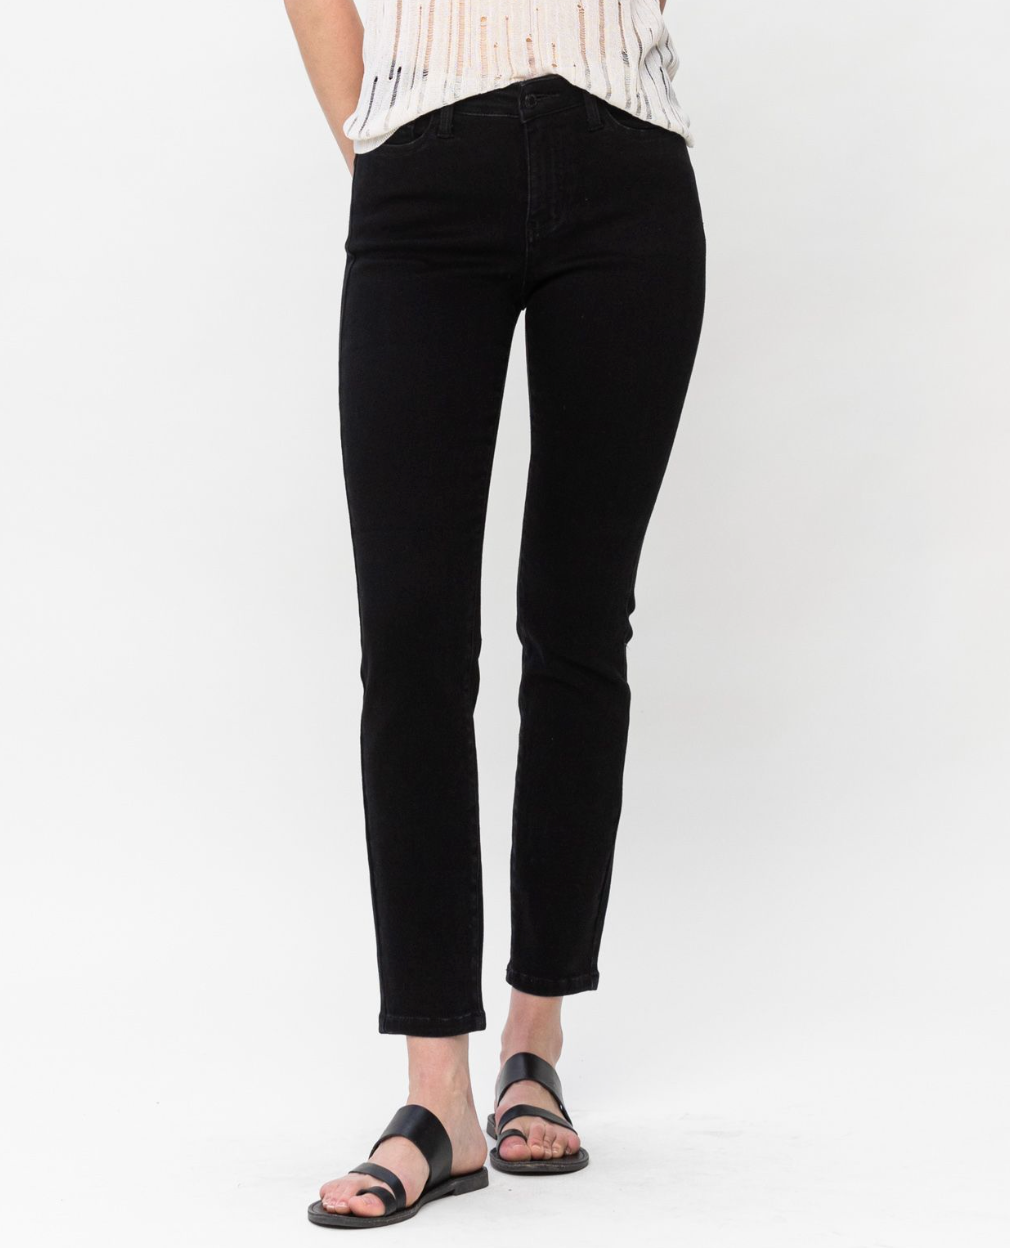 Judy Blue Black Slim Fit Jeans - The Teal Antler Boutique